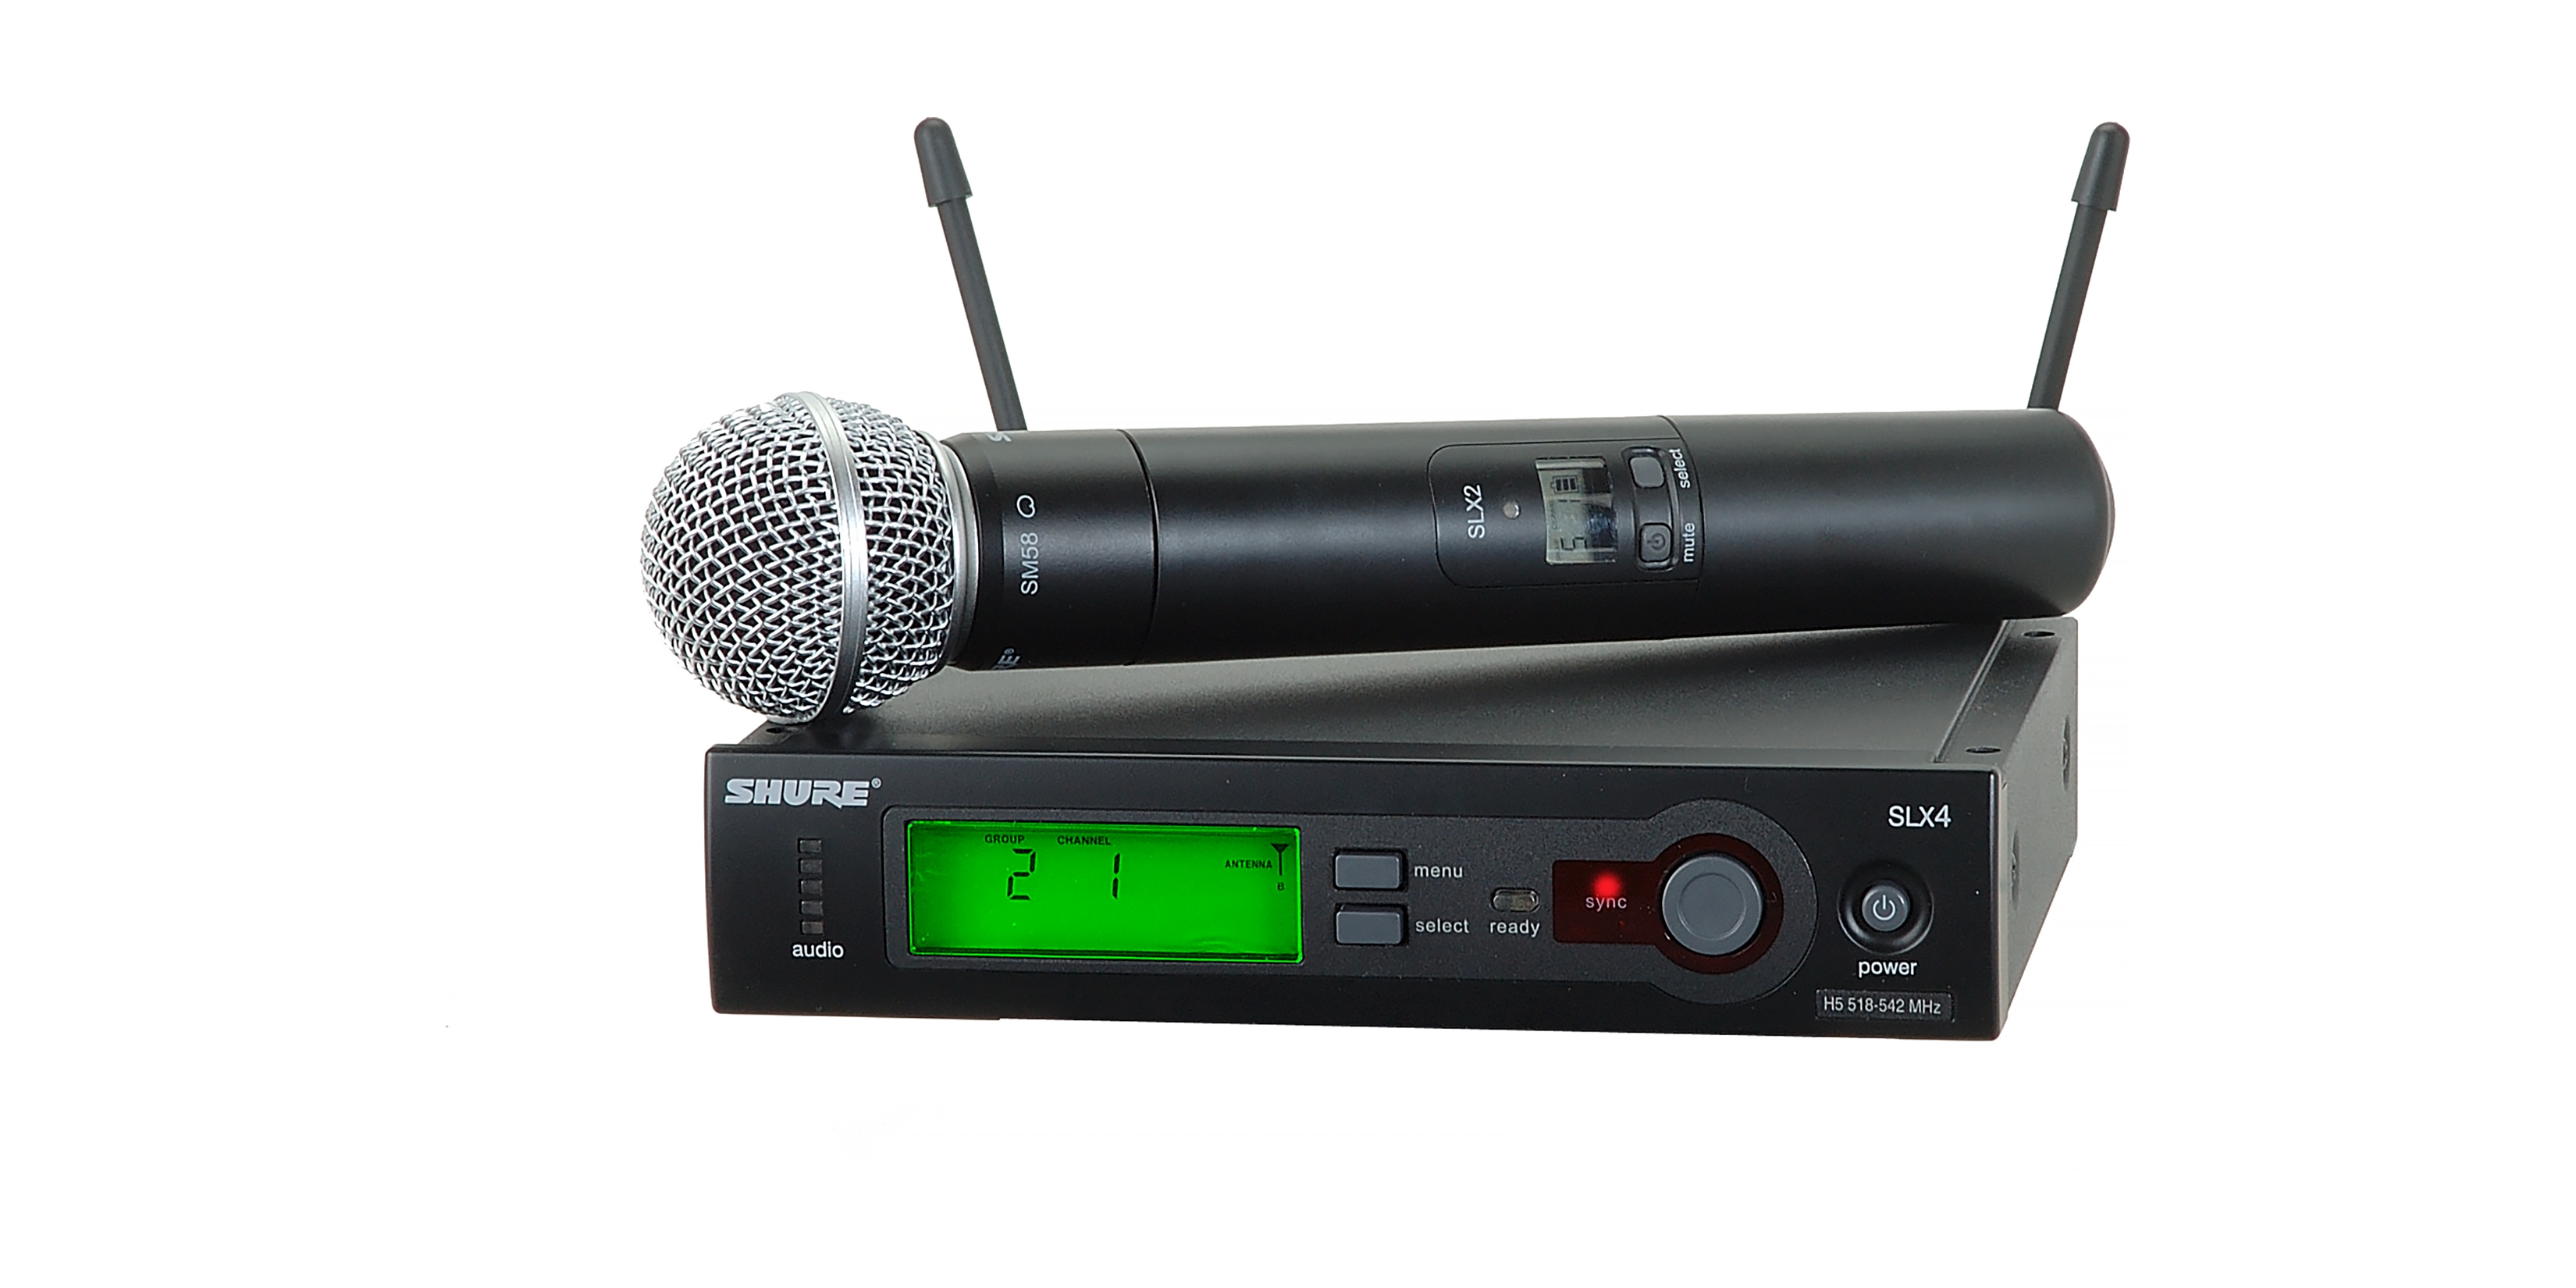 Shure Shure Wireless Microphone System 638-662MHZ | Australia's #1